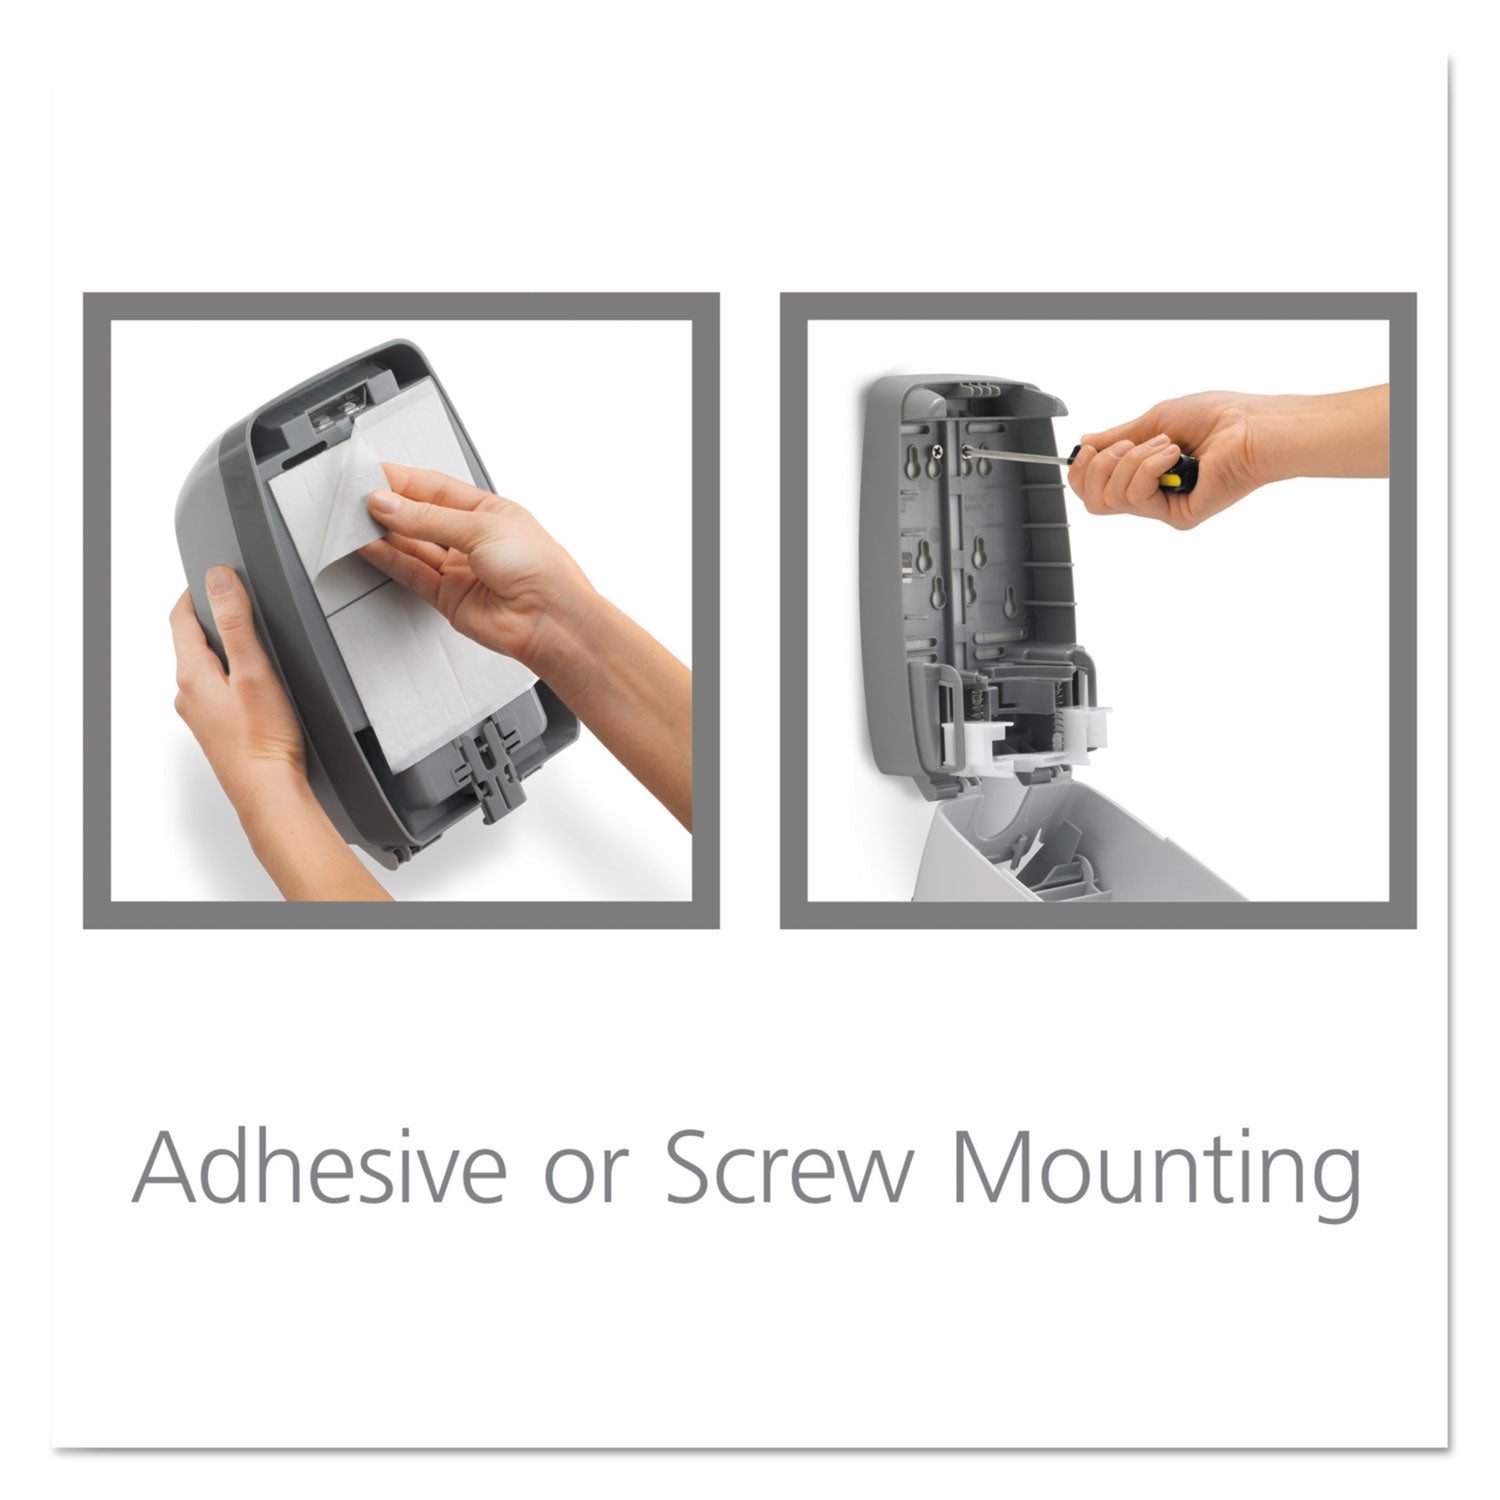 FMX-12 Foam Hand Sanitizer Dispenser, 1,200 mL Refill, 6.6 x 5.13 x 11, White - 